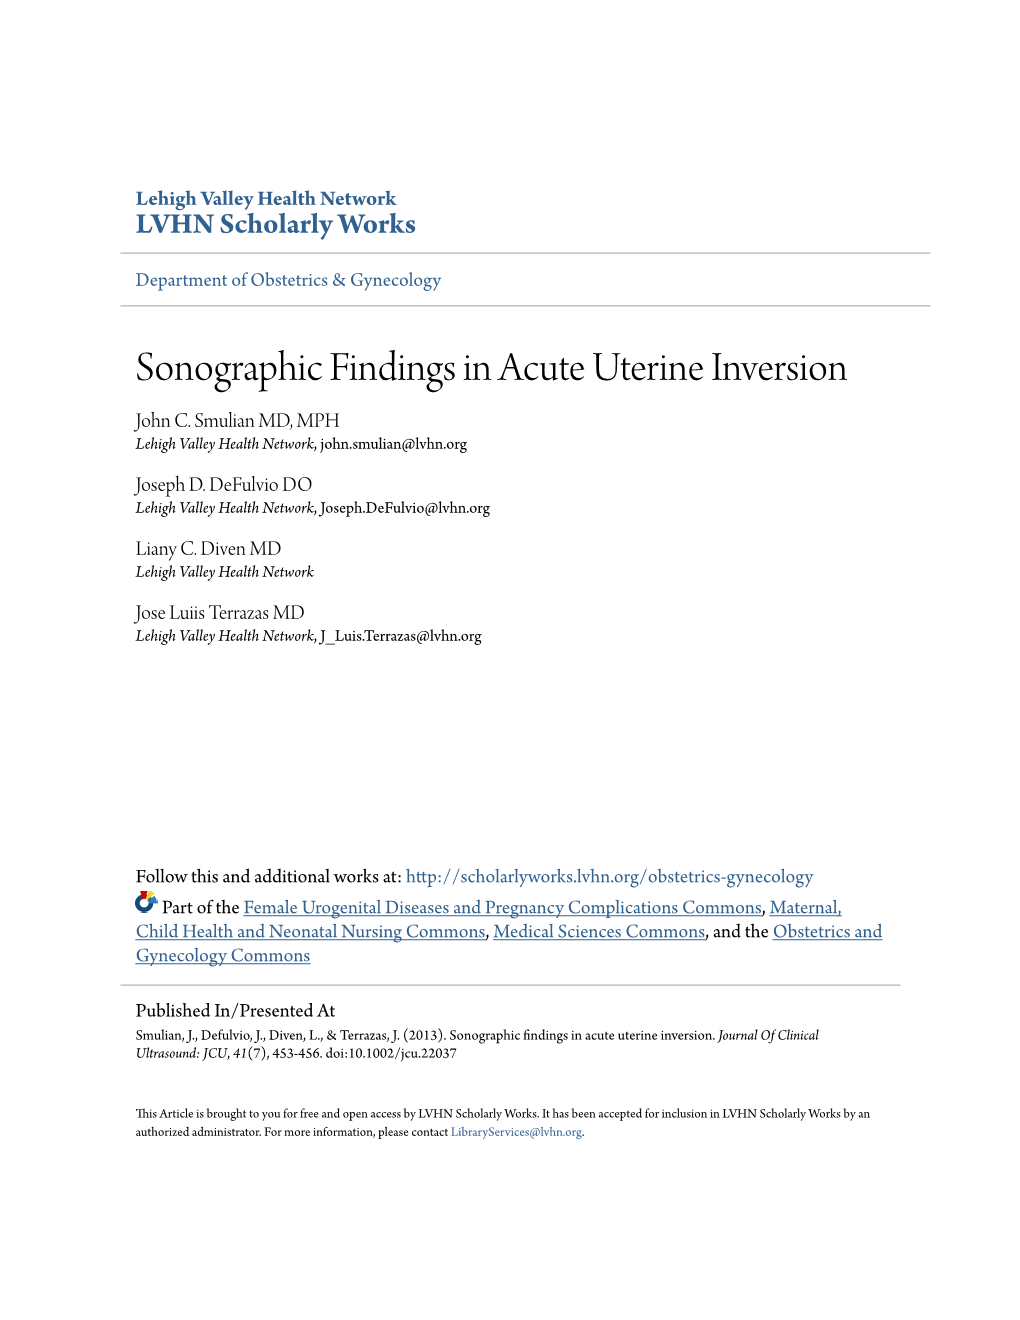 Sonographic Findings in Acute Uterine Inversion John C